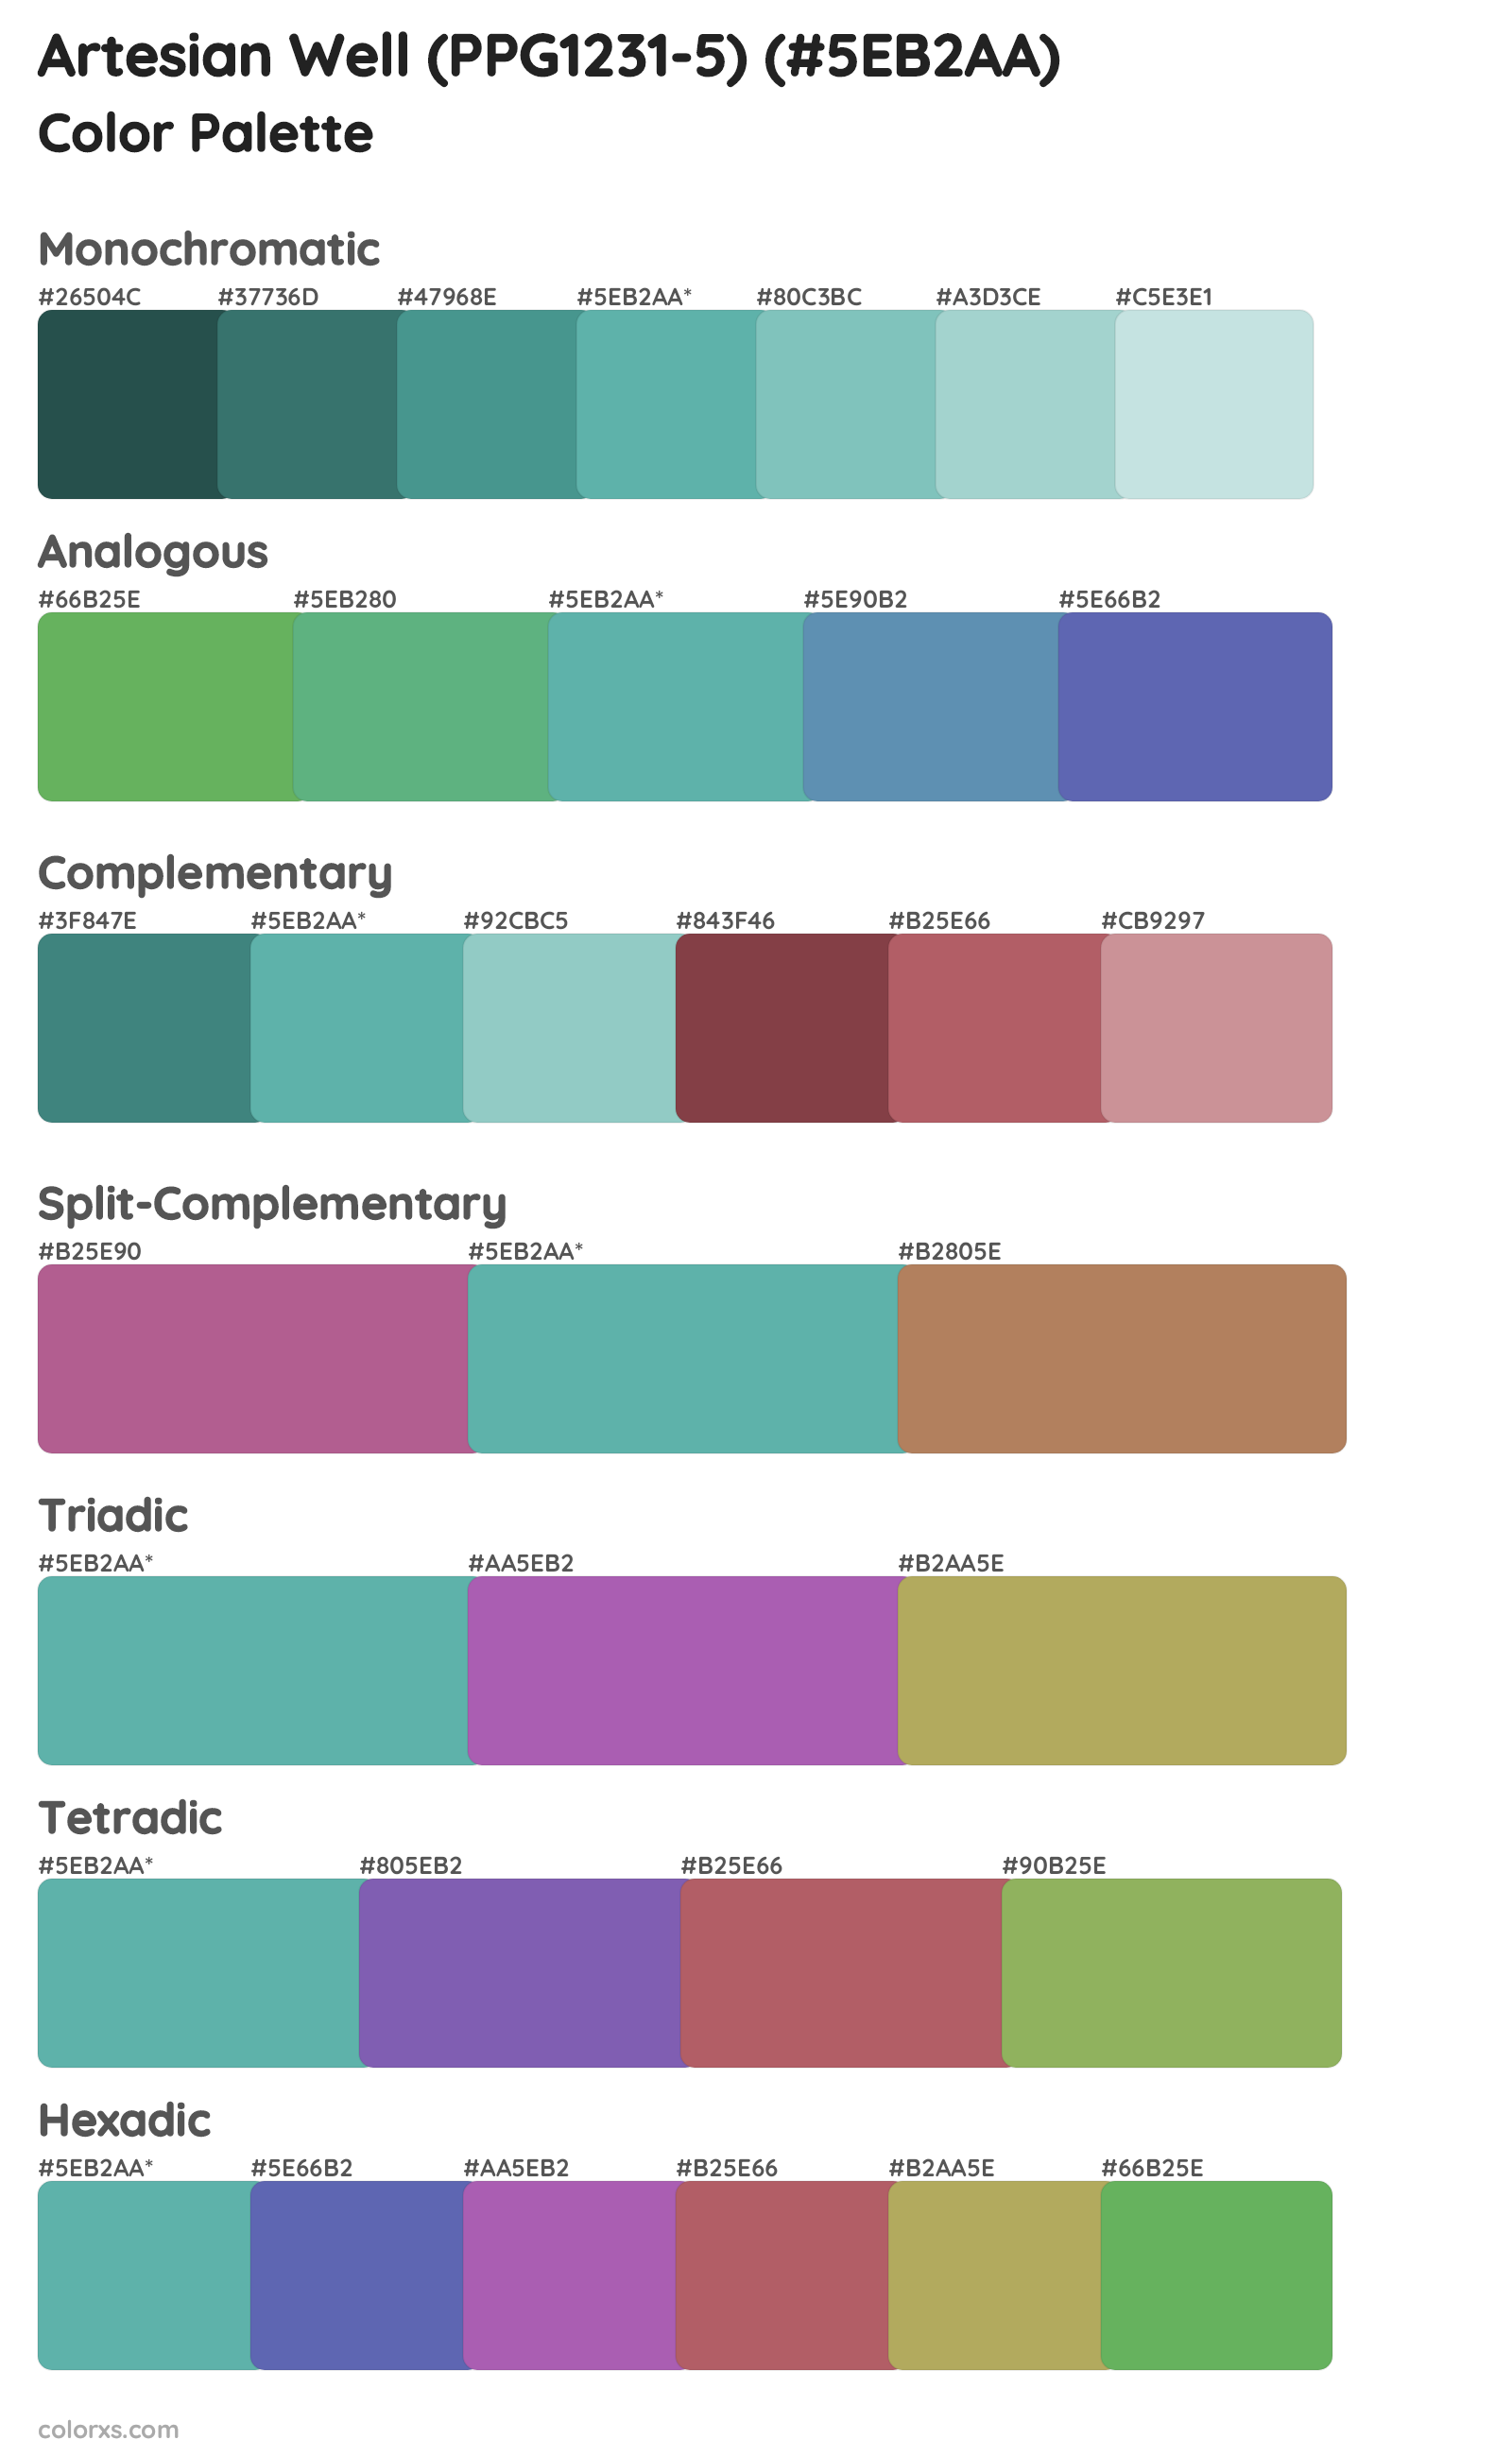 Artesian Well (PPG1231-5) Color Scheme Palettes